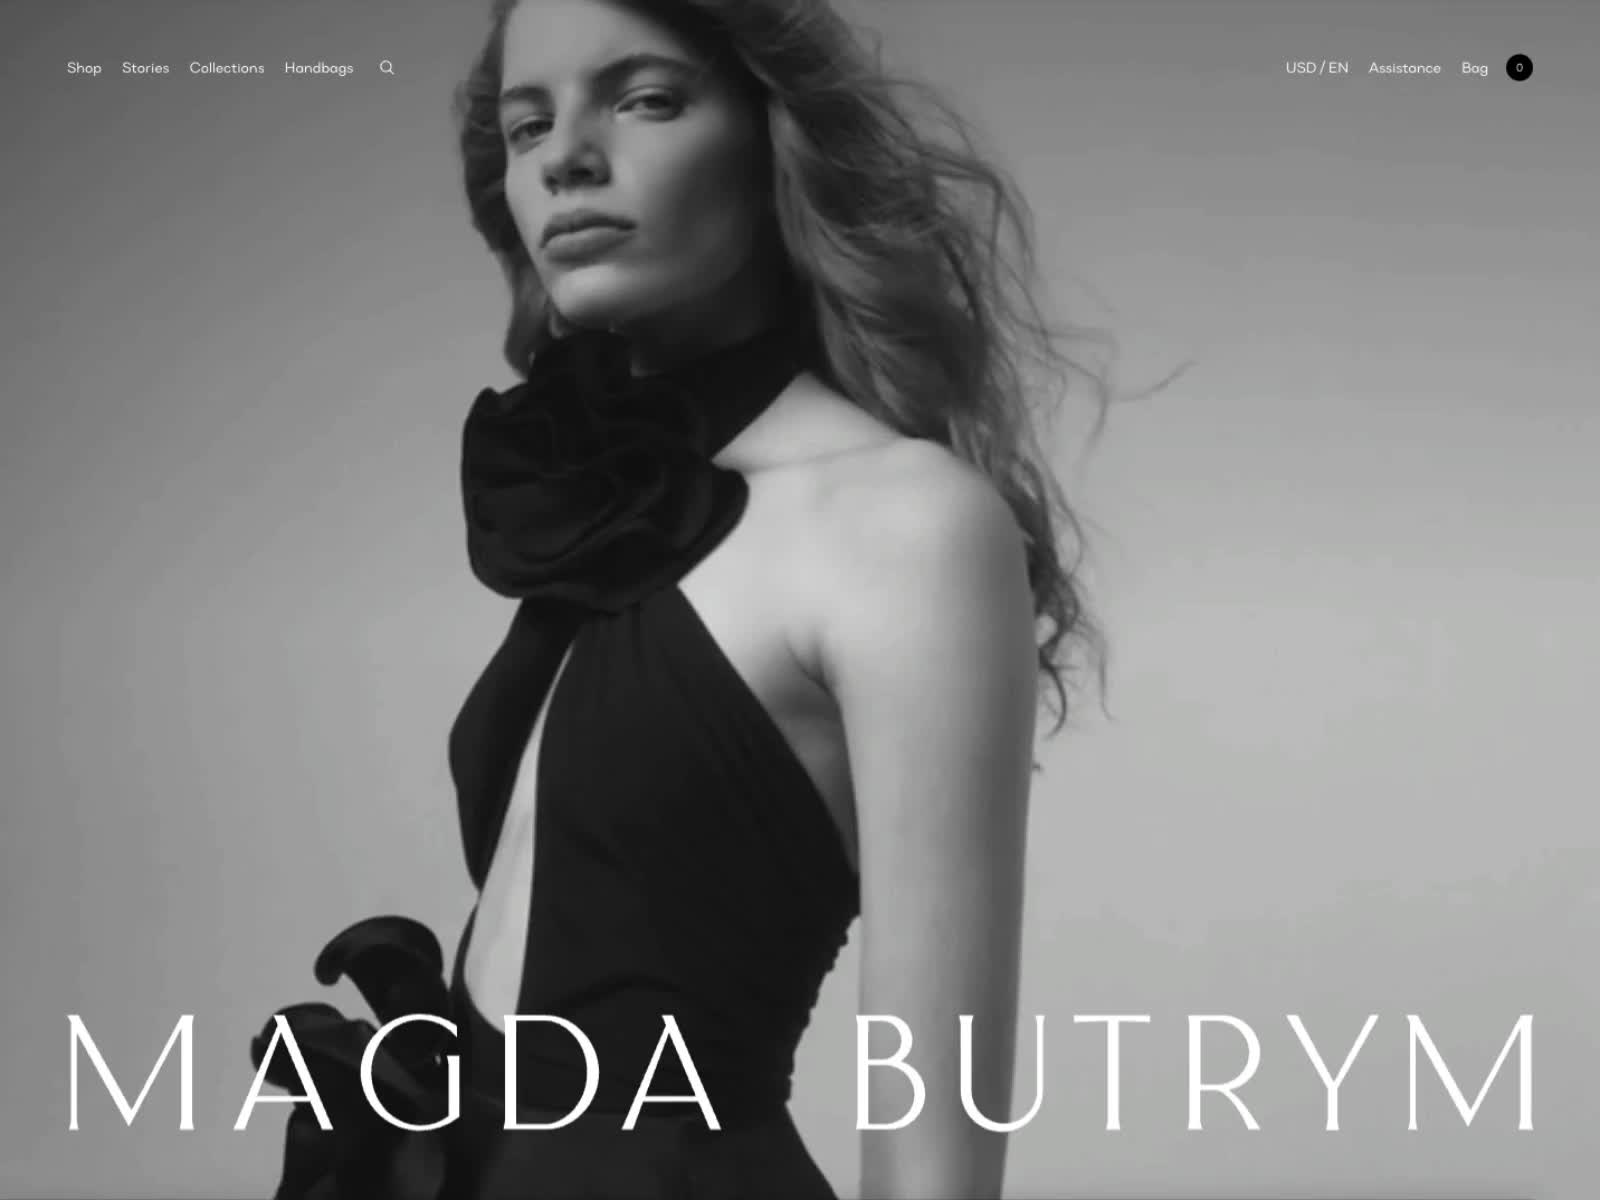 Magda Butrym - Menu navigation - Awwwards